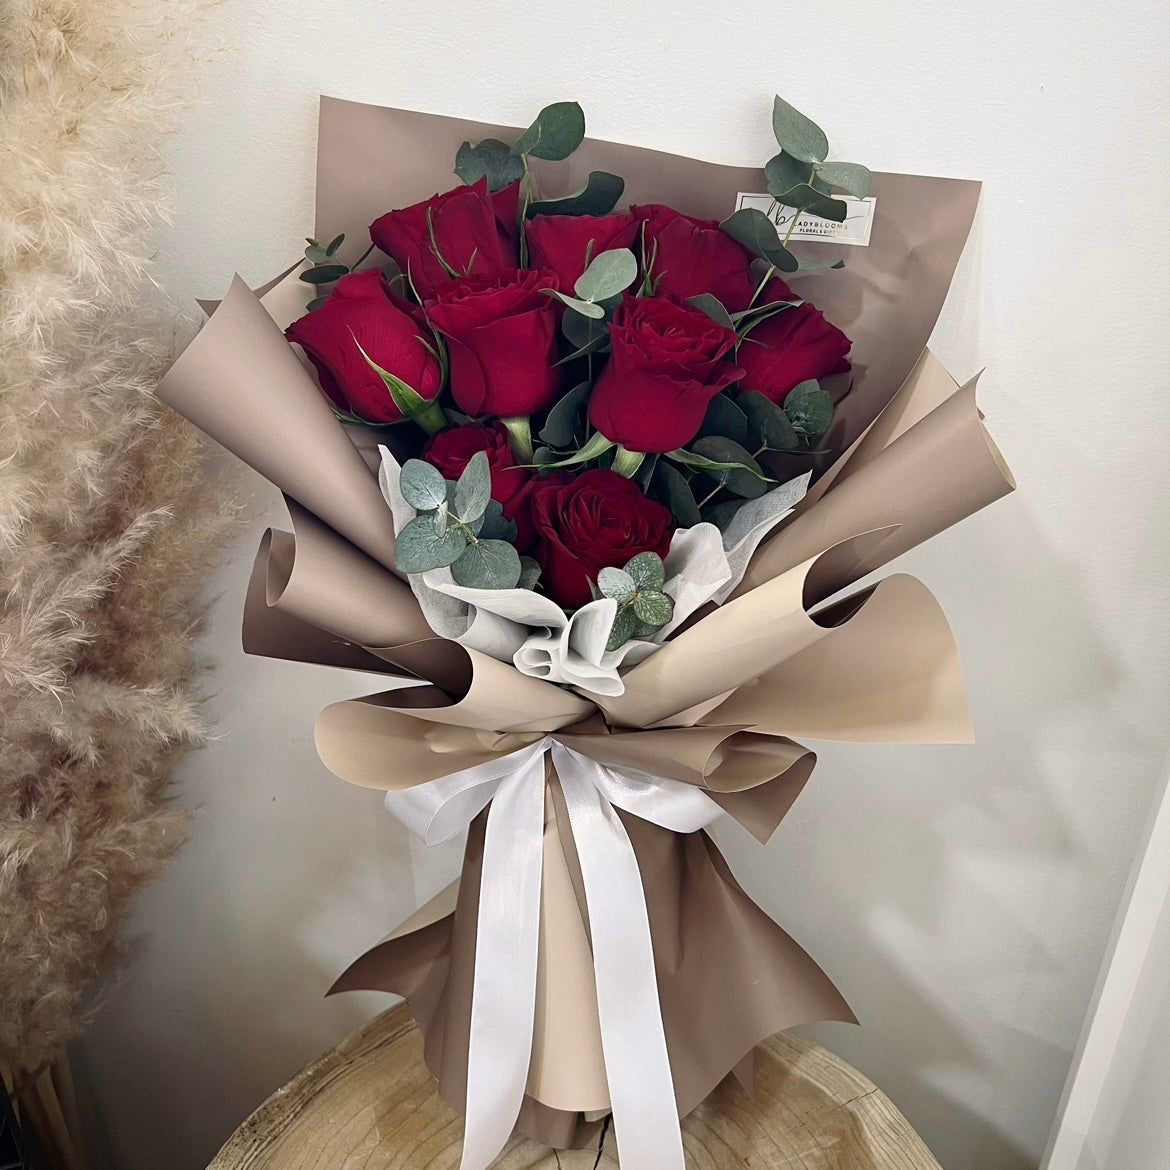 My Romance - 9 Stalks Fresh Red Roses